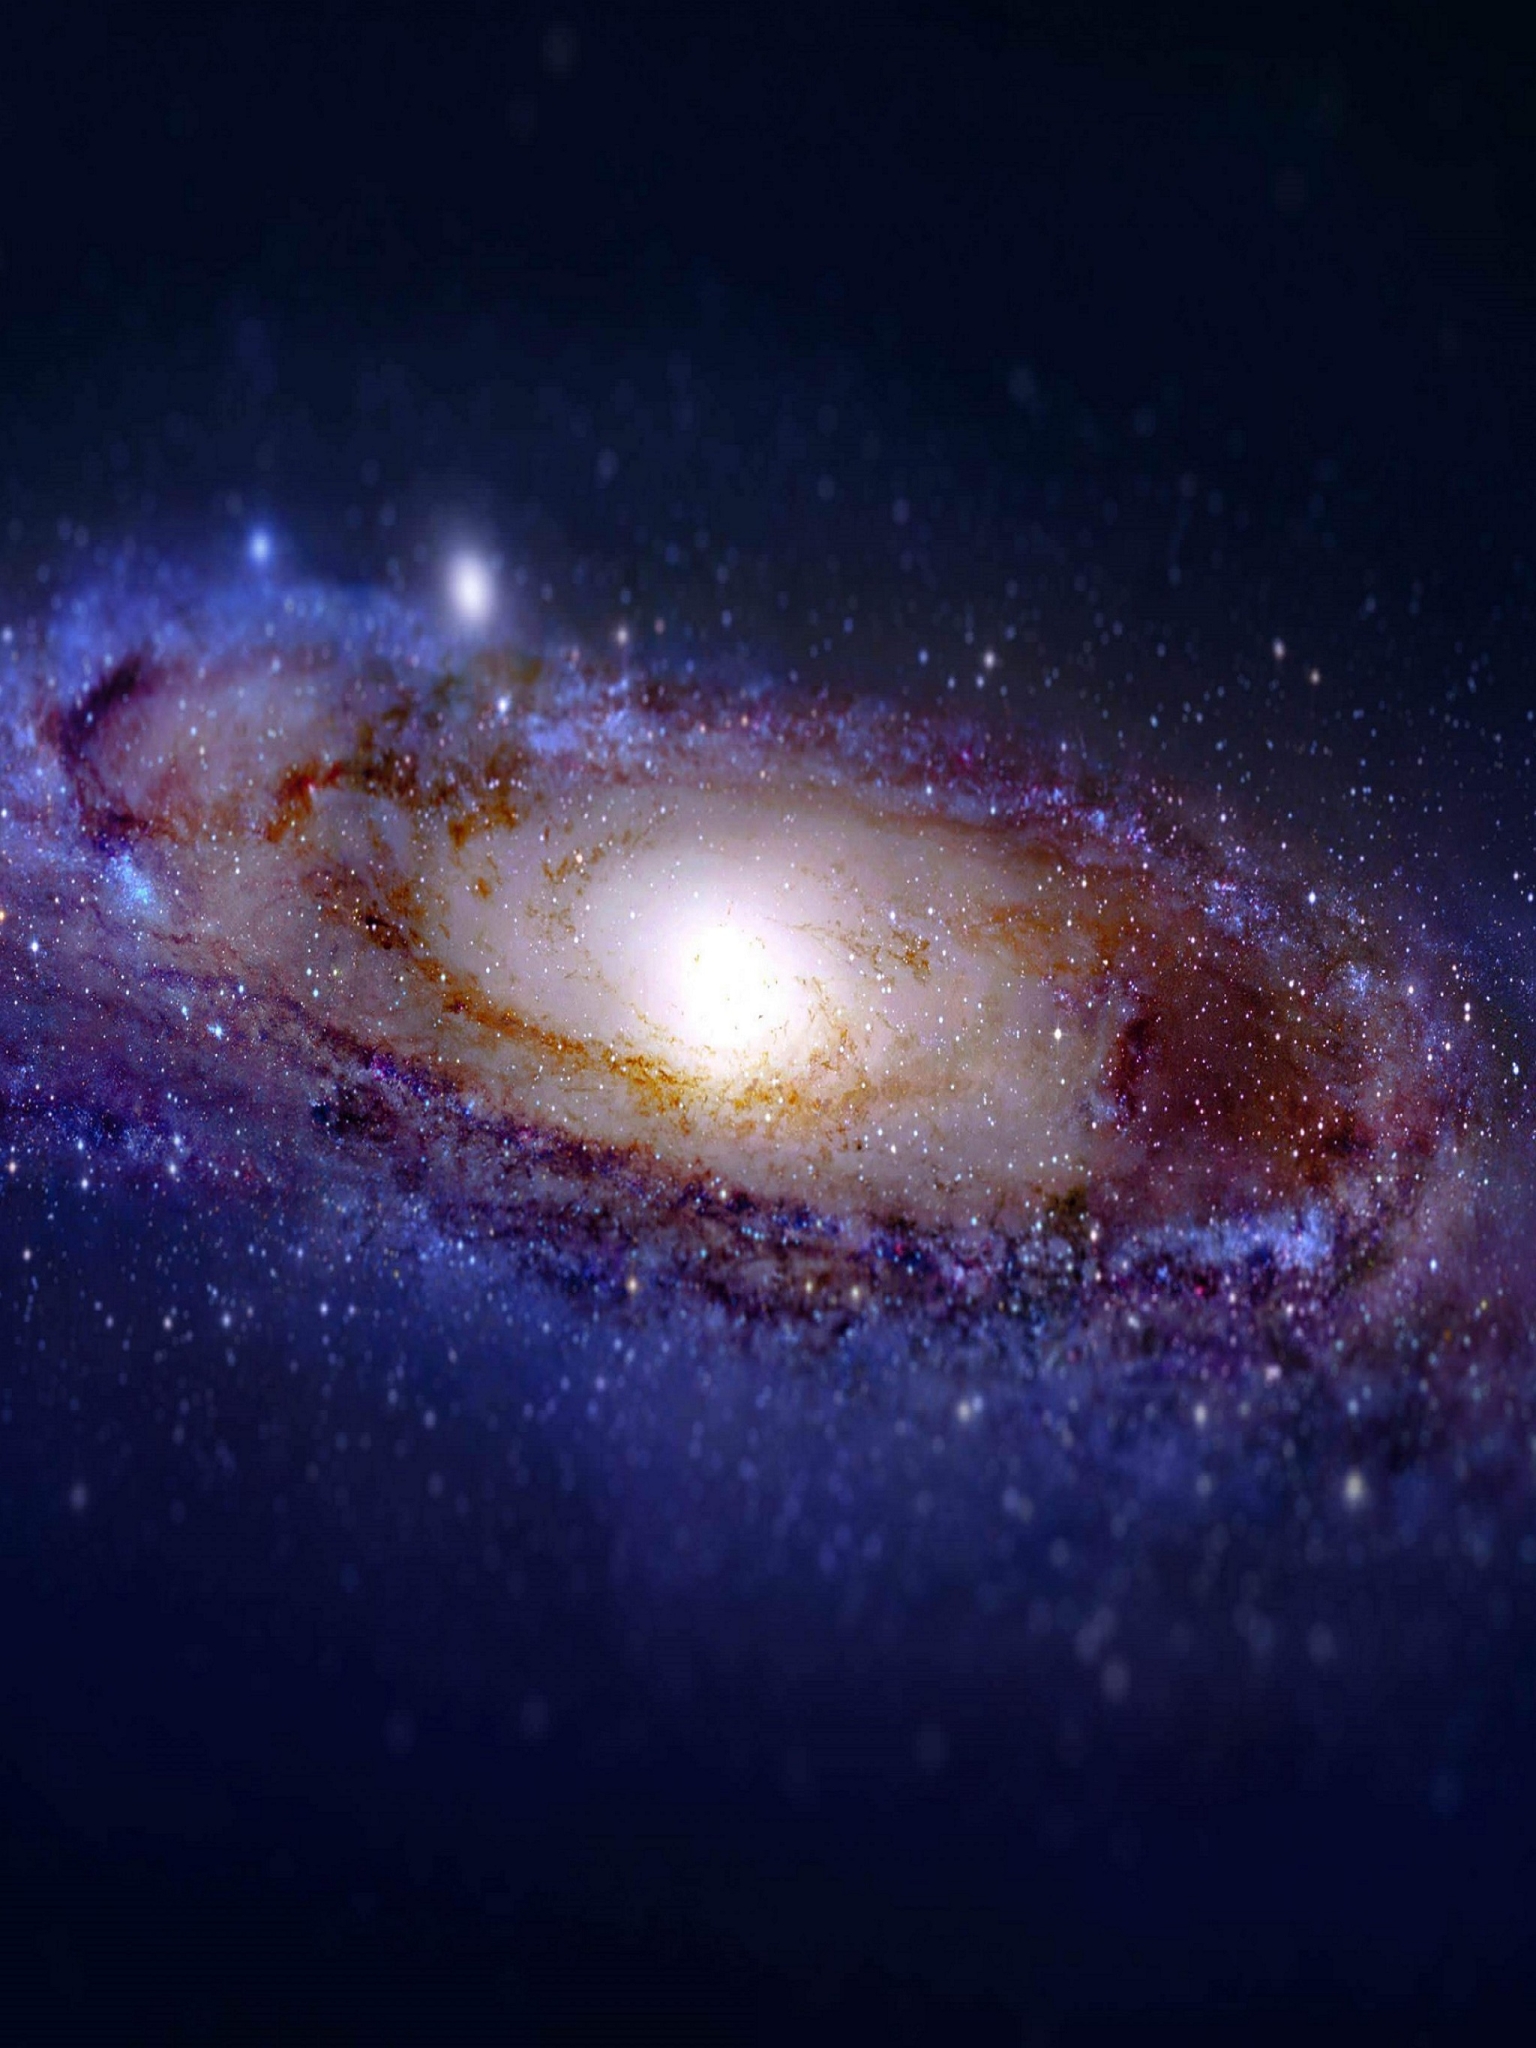 Andromeda Galaxy for Apple iPad Air 2 resolution